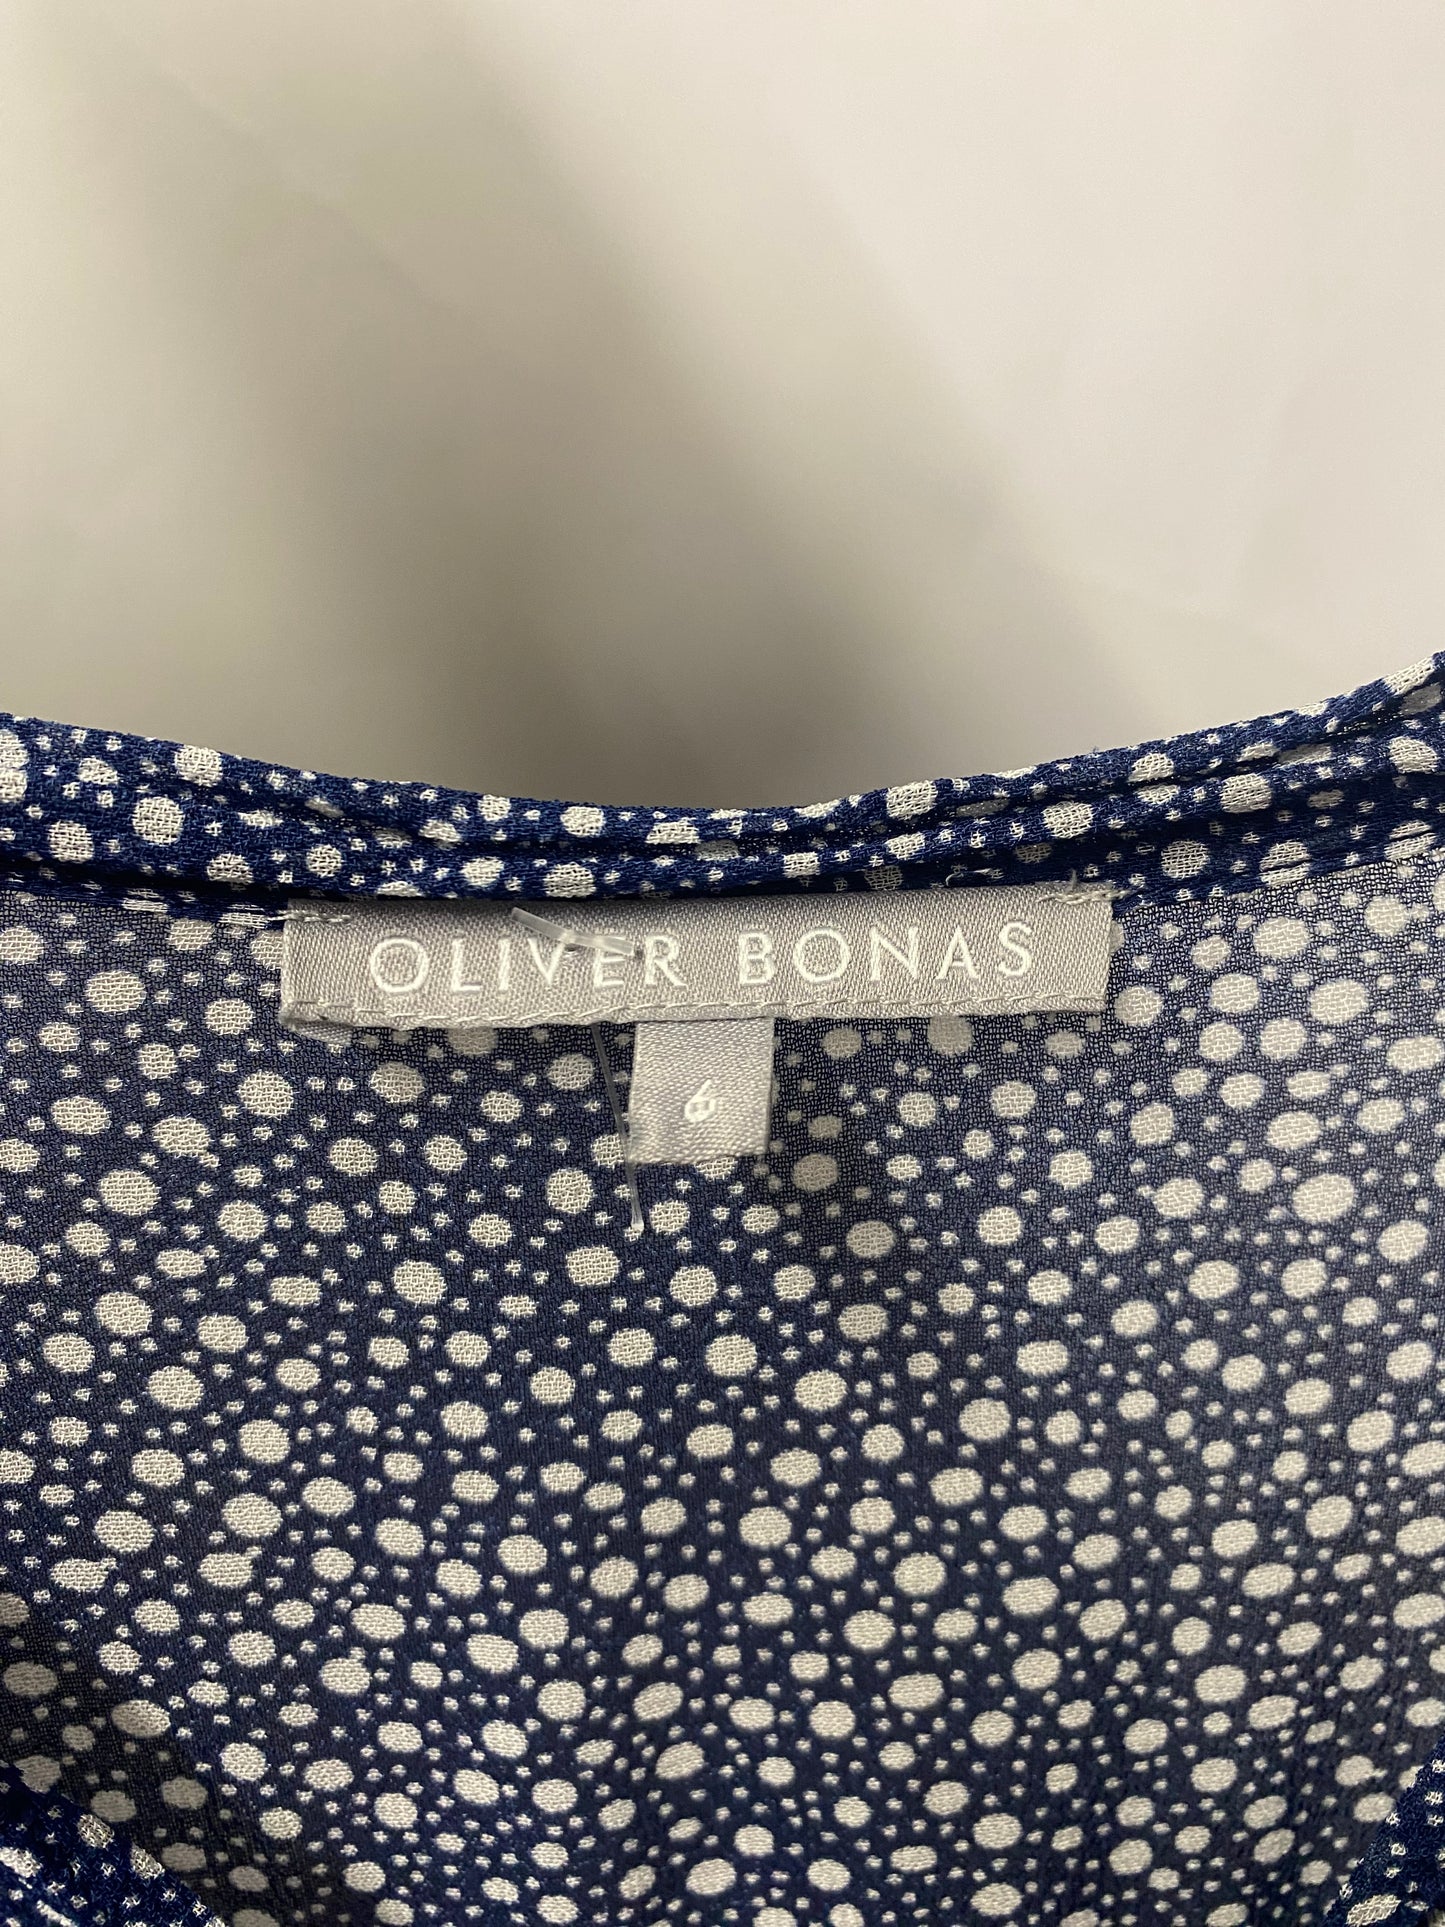 Oliver Bonas Blue Polka Dot Dress 6